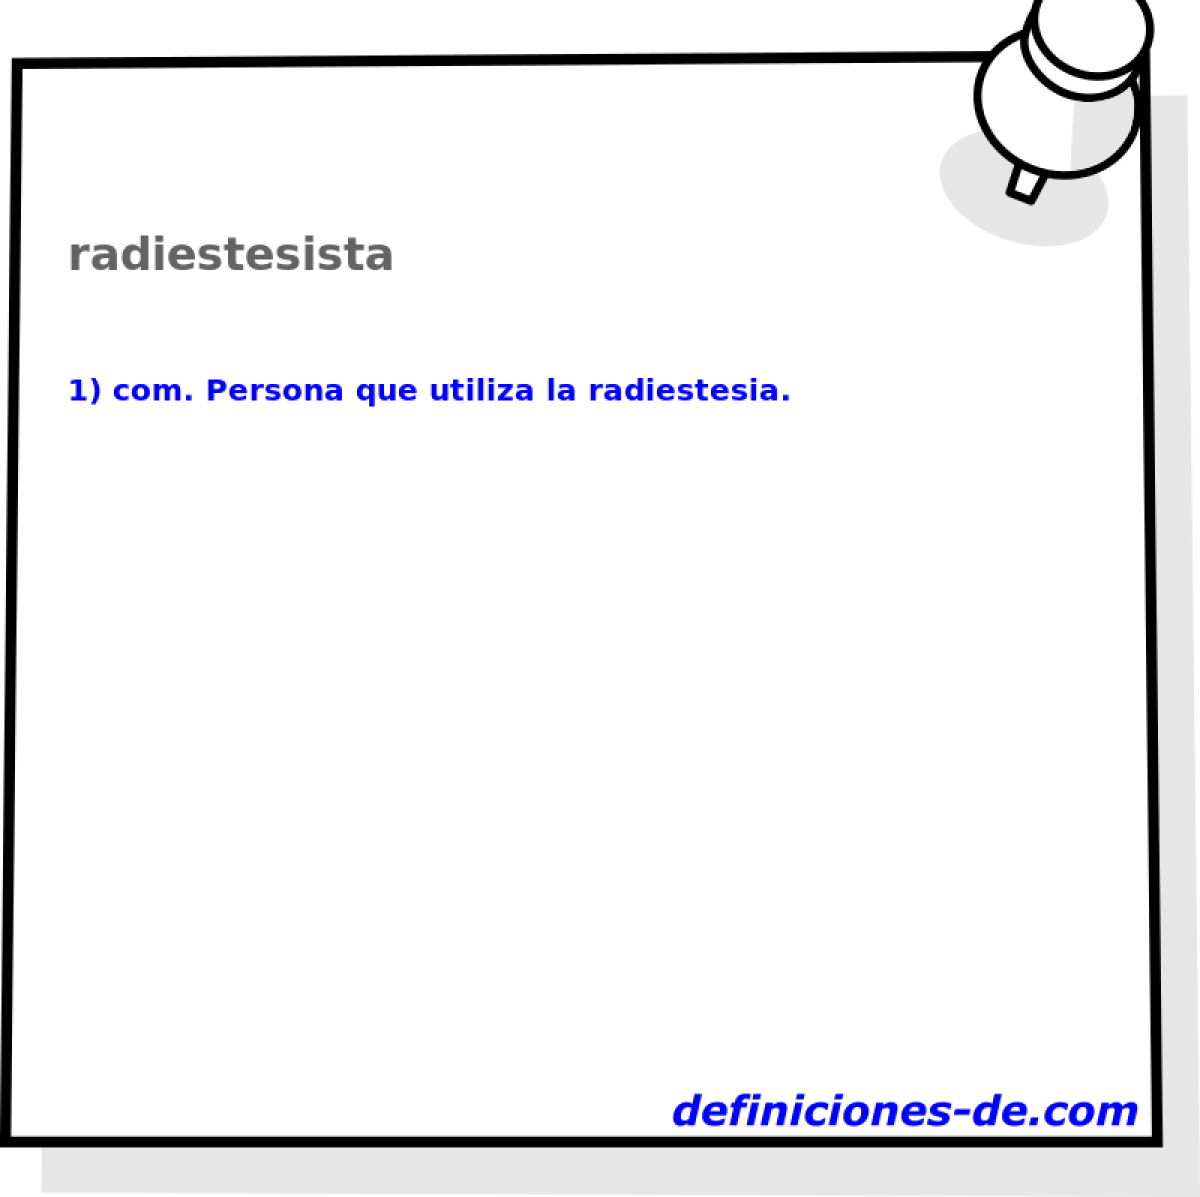 radiestesista 